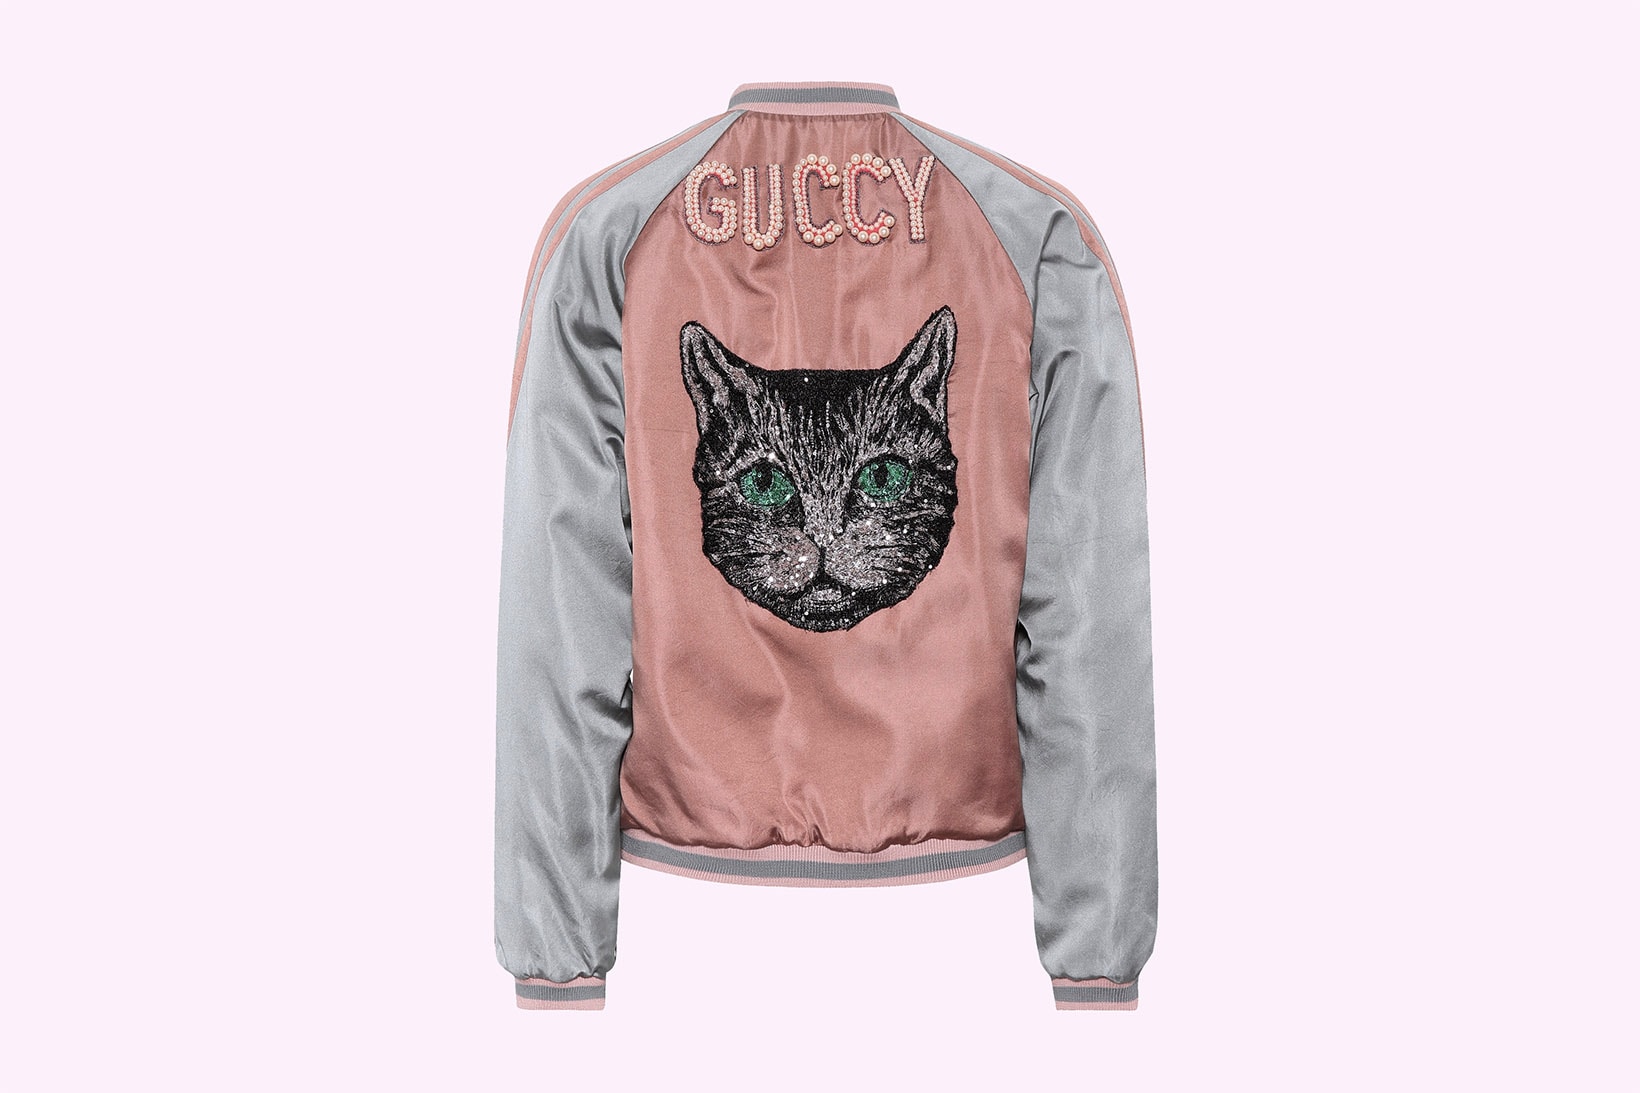 Gucci Bootleg Guccy Printed Sweatshirts